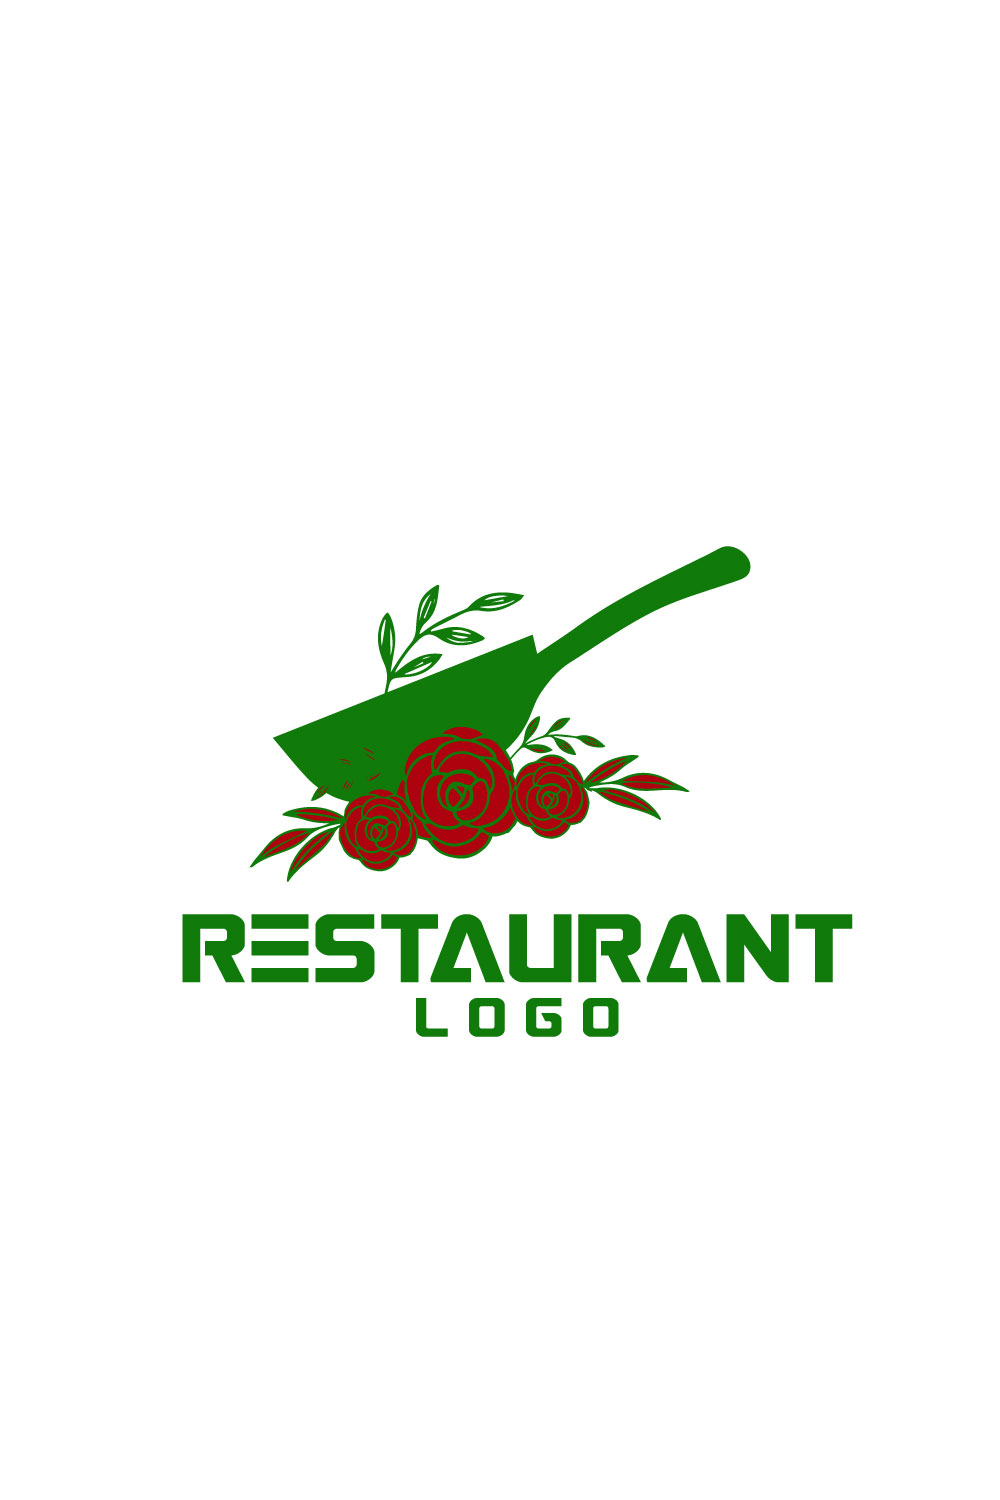 Free Kitchen Magic Logo pinterest preview image.